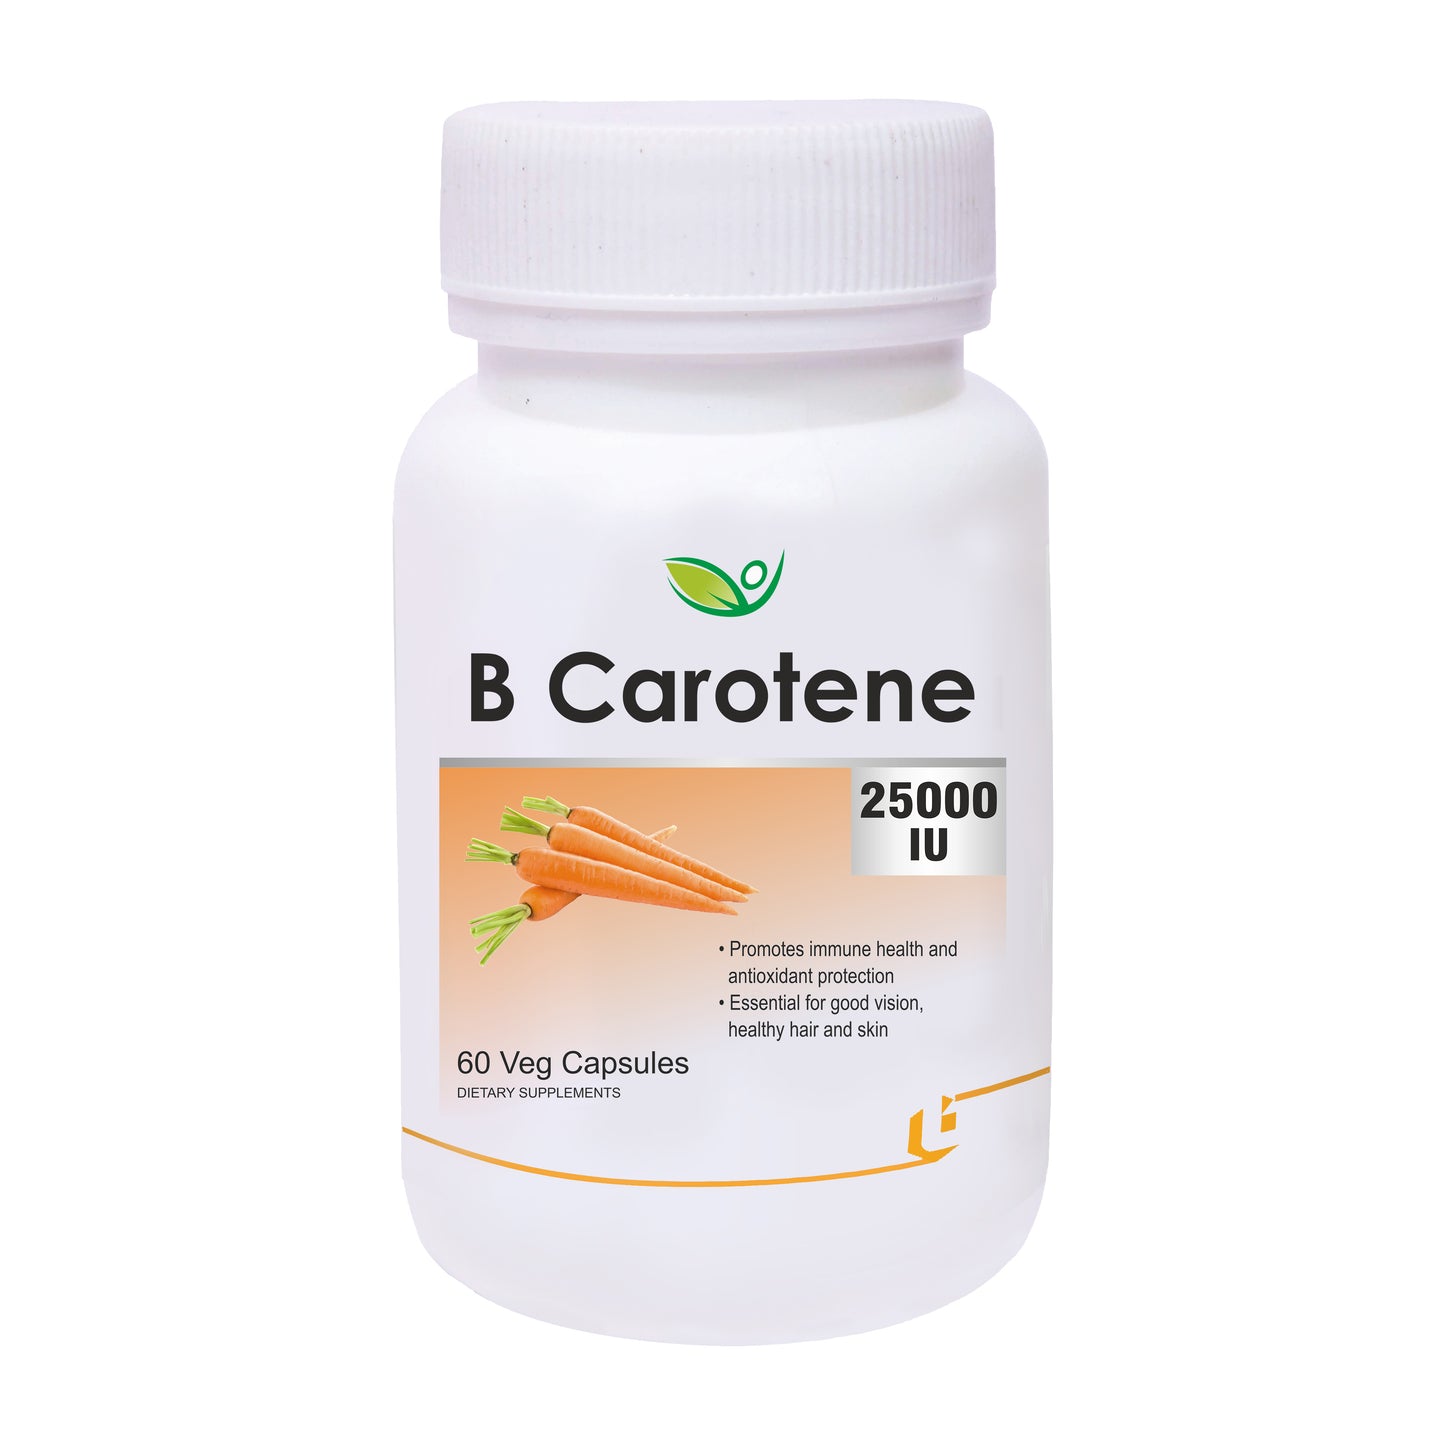 Biotrex Beta Carotene 25000IU - 60 Capsules